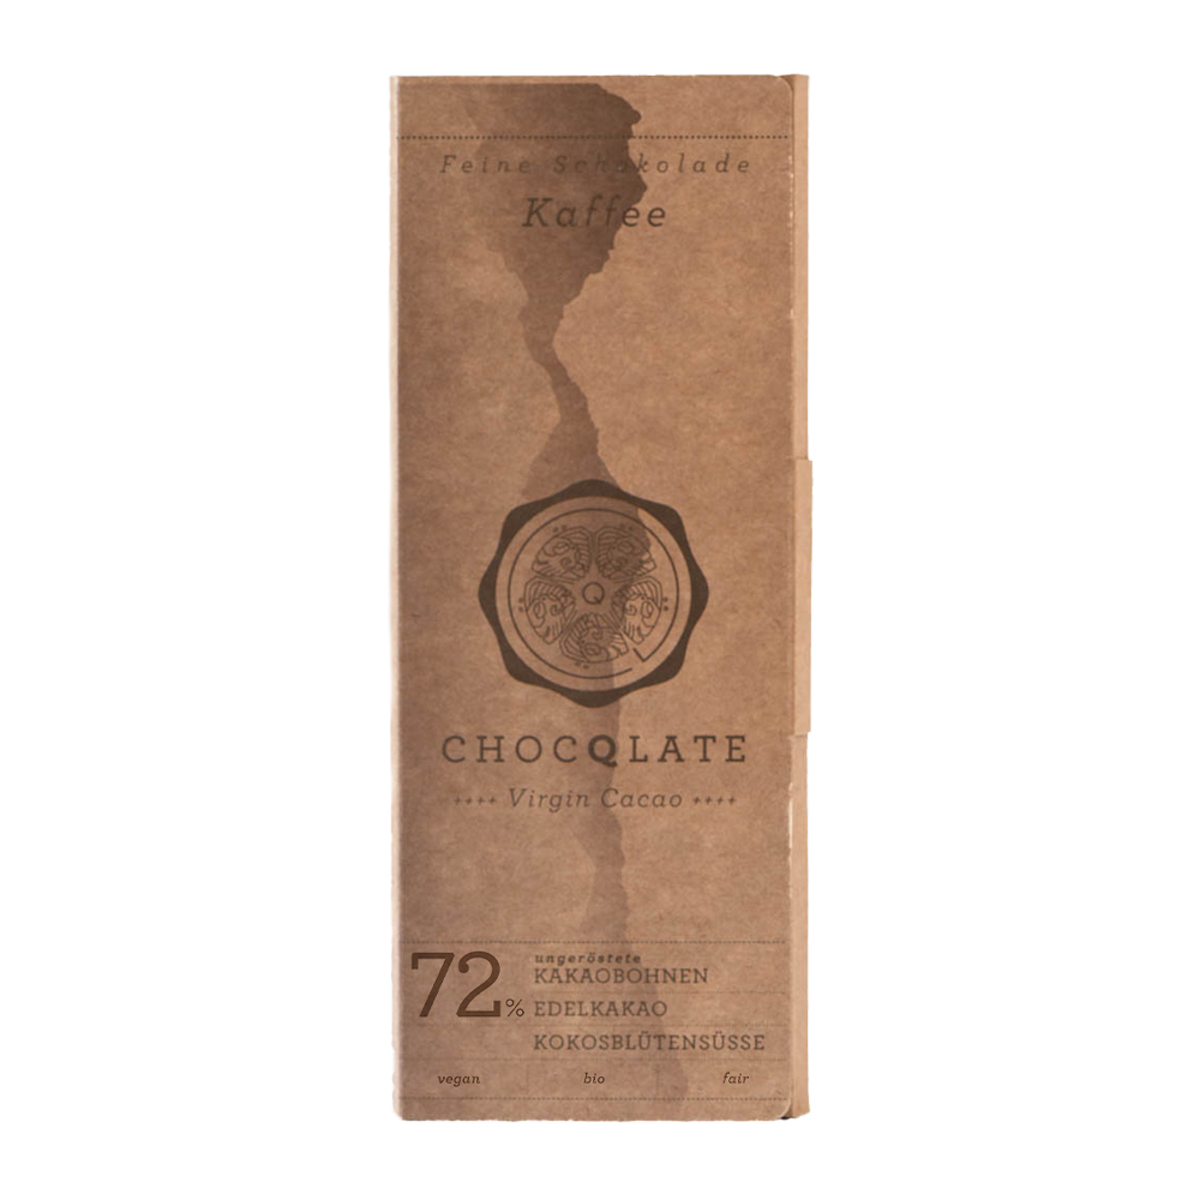 Coffret Chocolat N ° 17 Matcha - Fraise - Framboise - Café